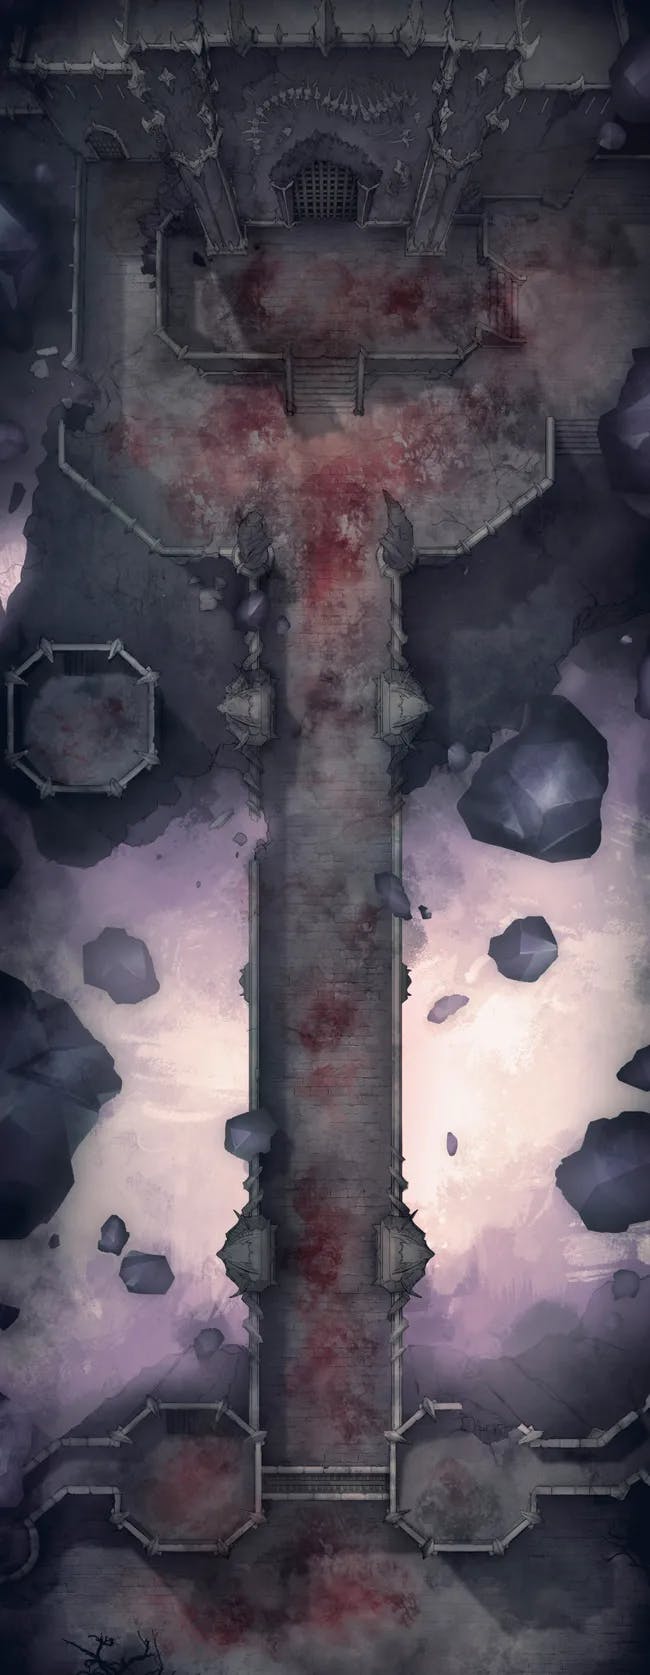 Shadowfell Fortress Bridge map, Bloodbath variant